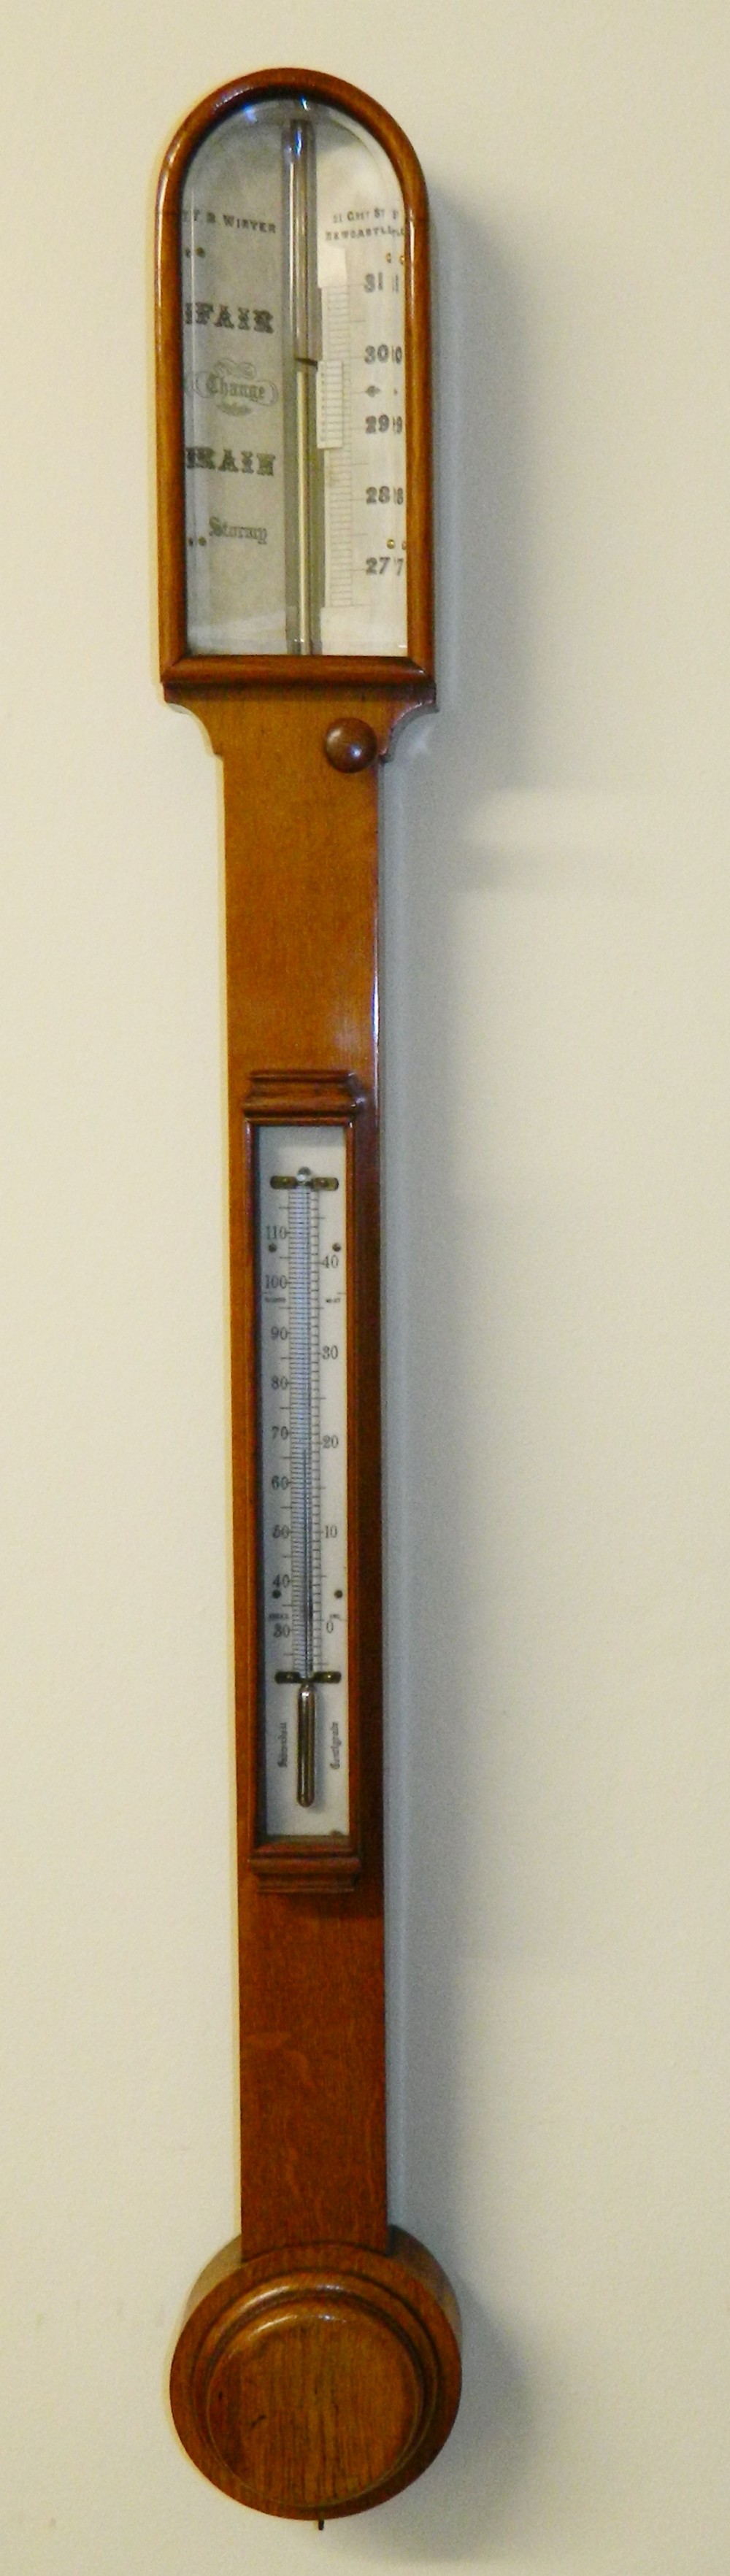 oak stick barometer by tb winter of newcastle